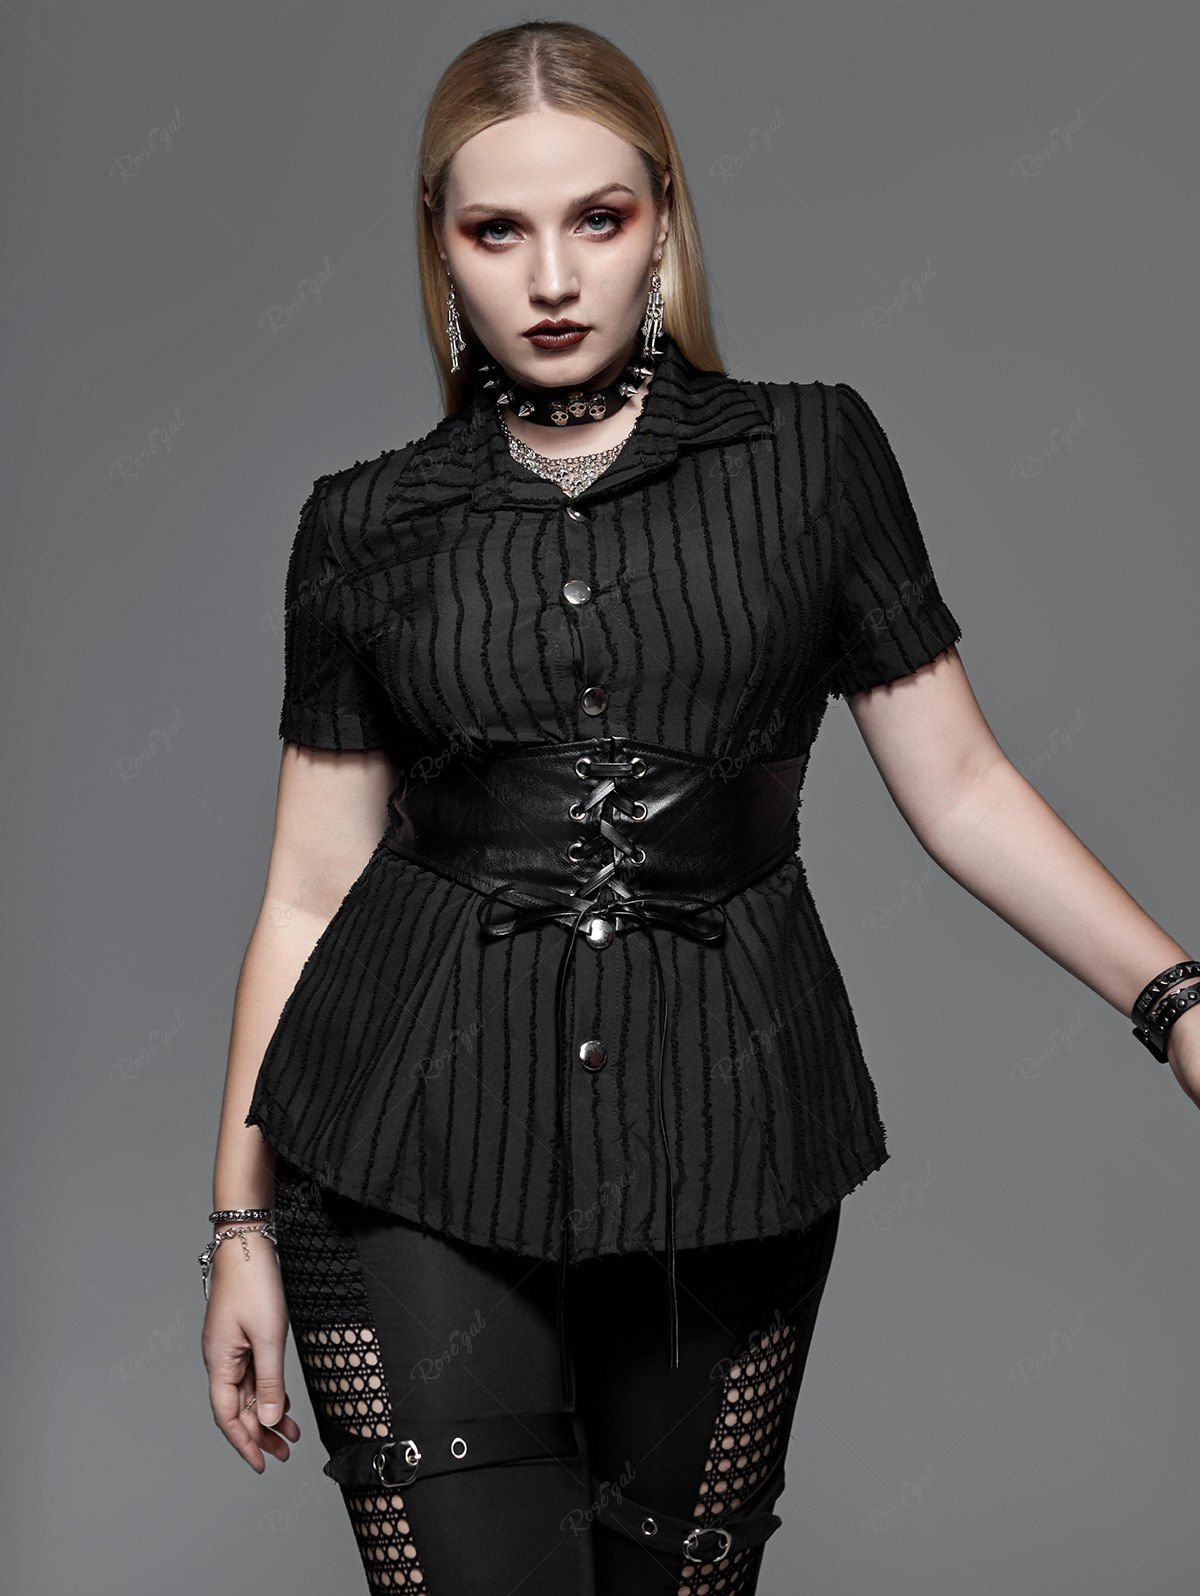 1x Gothic Dark Lace Up Female Waist Corset Belt Wide PU Leather